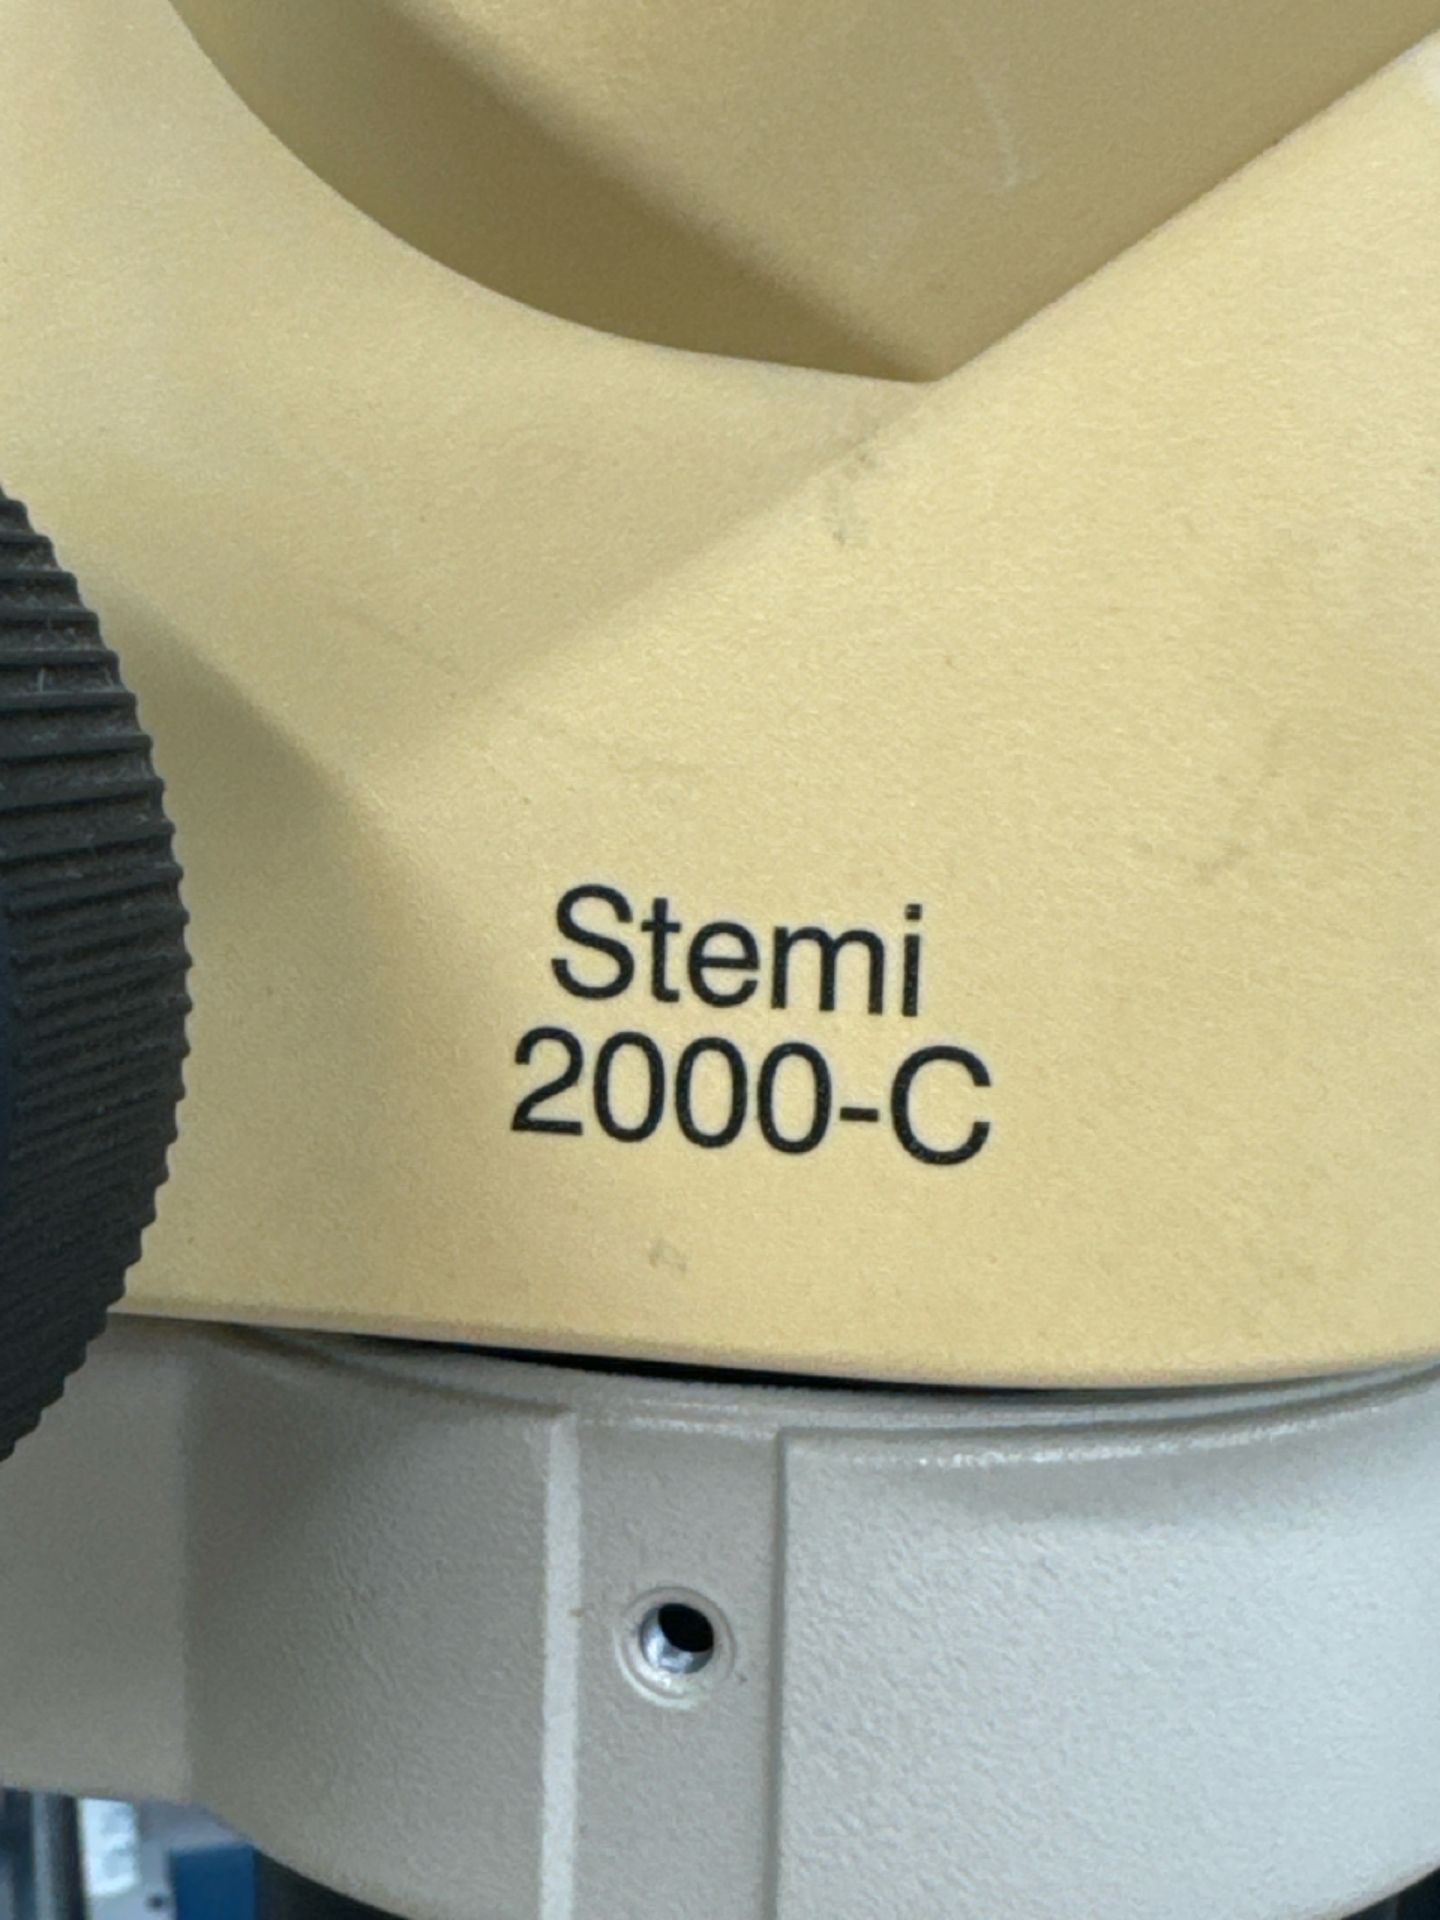 MicroMetrics Stemi 2000-C Microscope w/ Adjustable Mount - Image 6 of 7